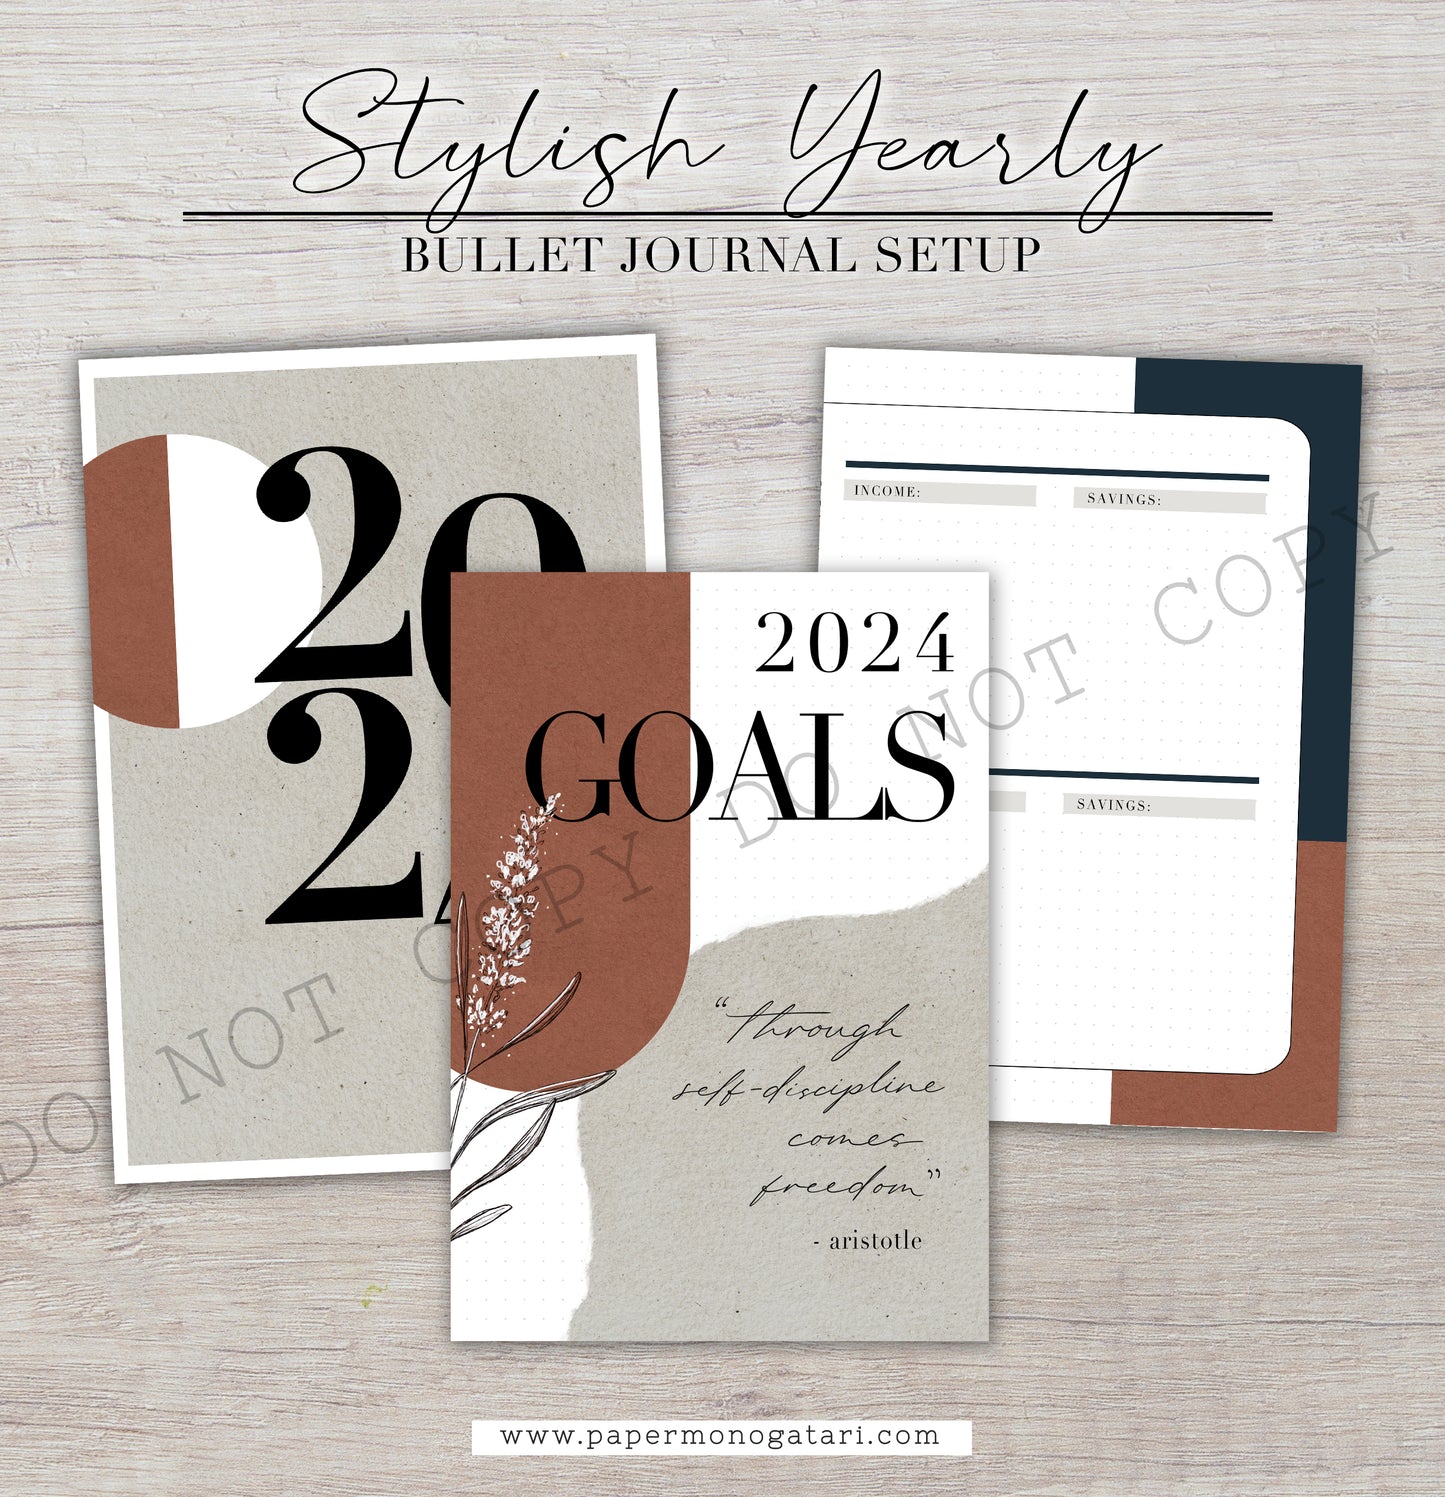 2023-2024 Fresh Yearly Setup  Digital Bullet Journal Theme – Paper  Monogatari